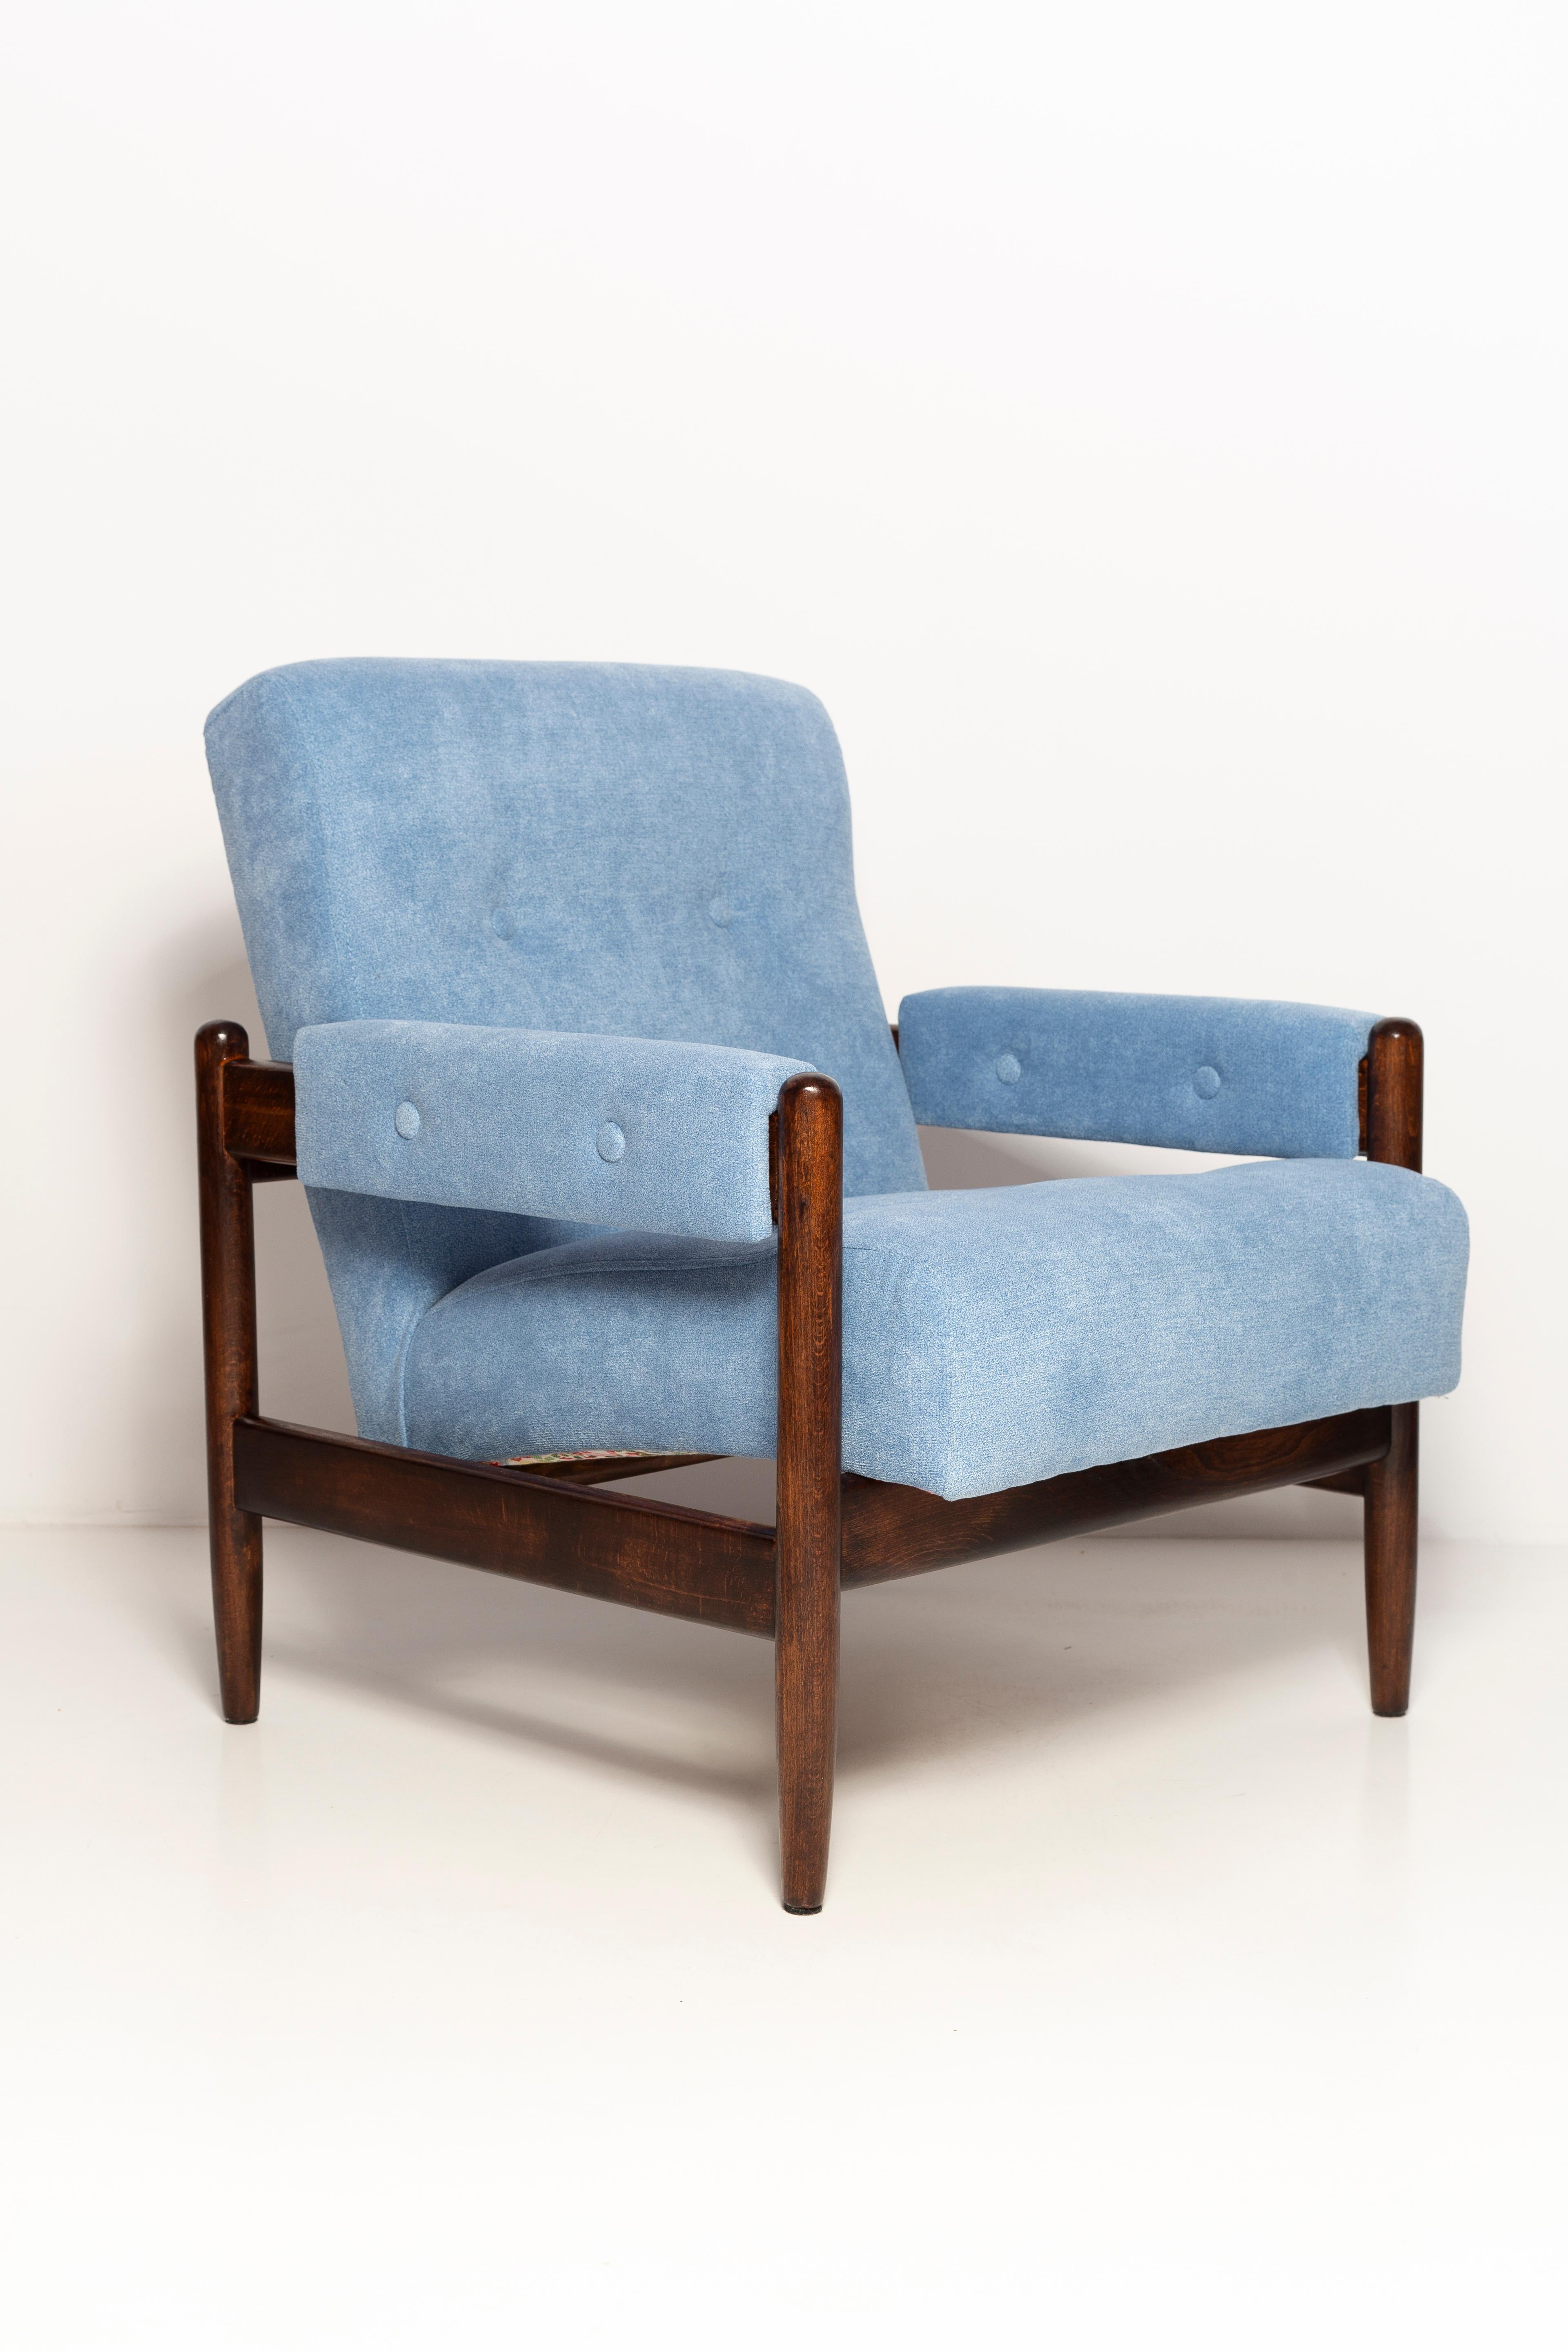 Polish Set of Two Mid Century Blue Velvet Vintage Armchairs, Walnut Wood, Europe, 1960s For Sale